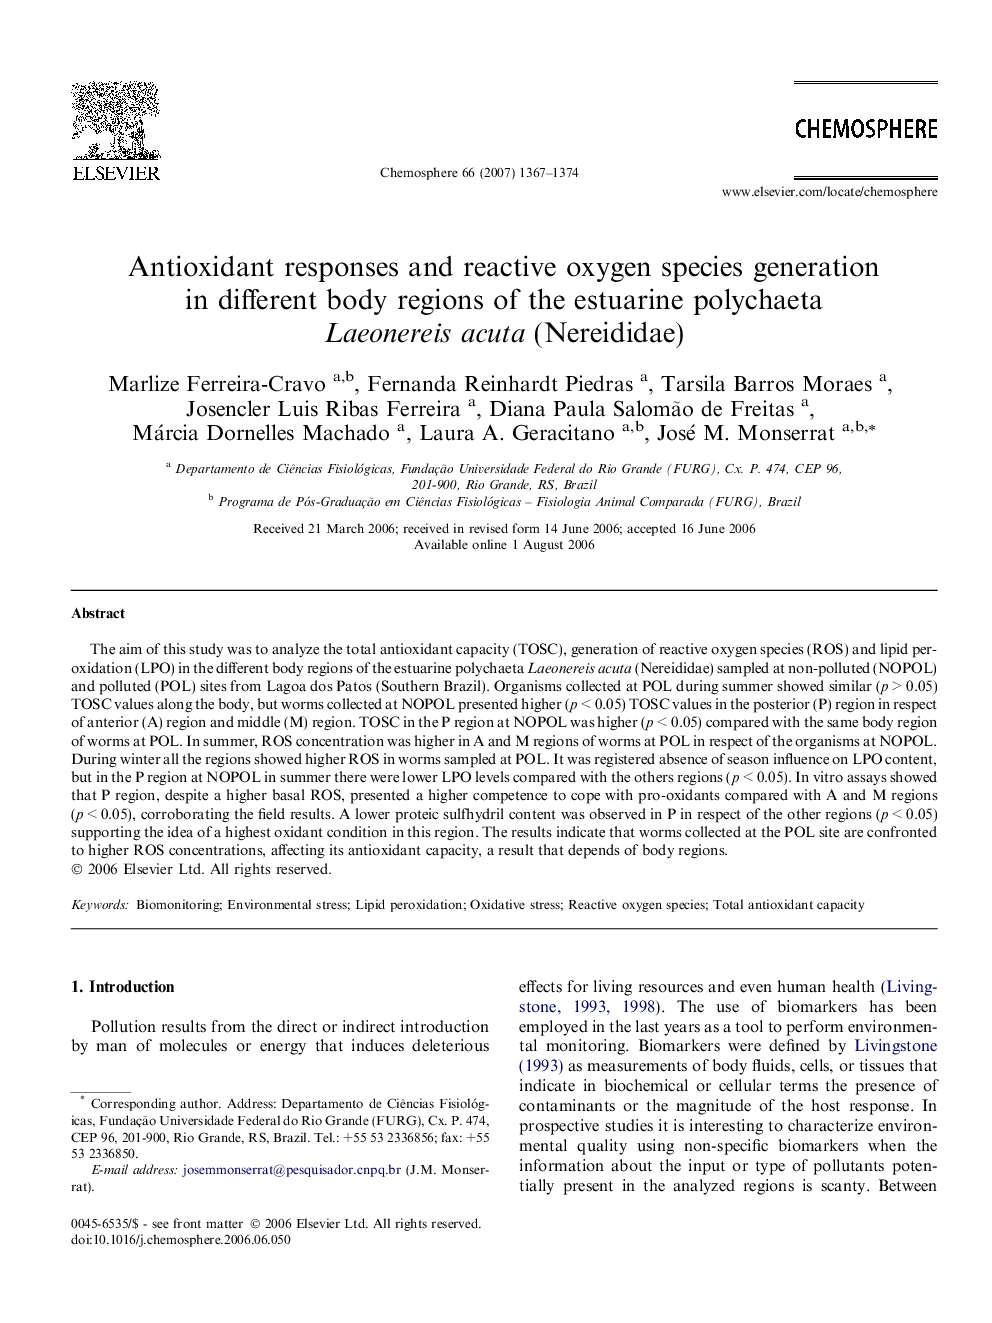 Antioxidant responses and reactive oxygen species generation in different body regions of the estuarine polychaeta Laeonereis acuta (Nereididae)